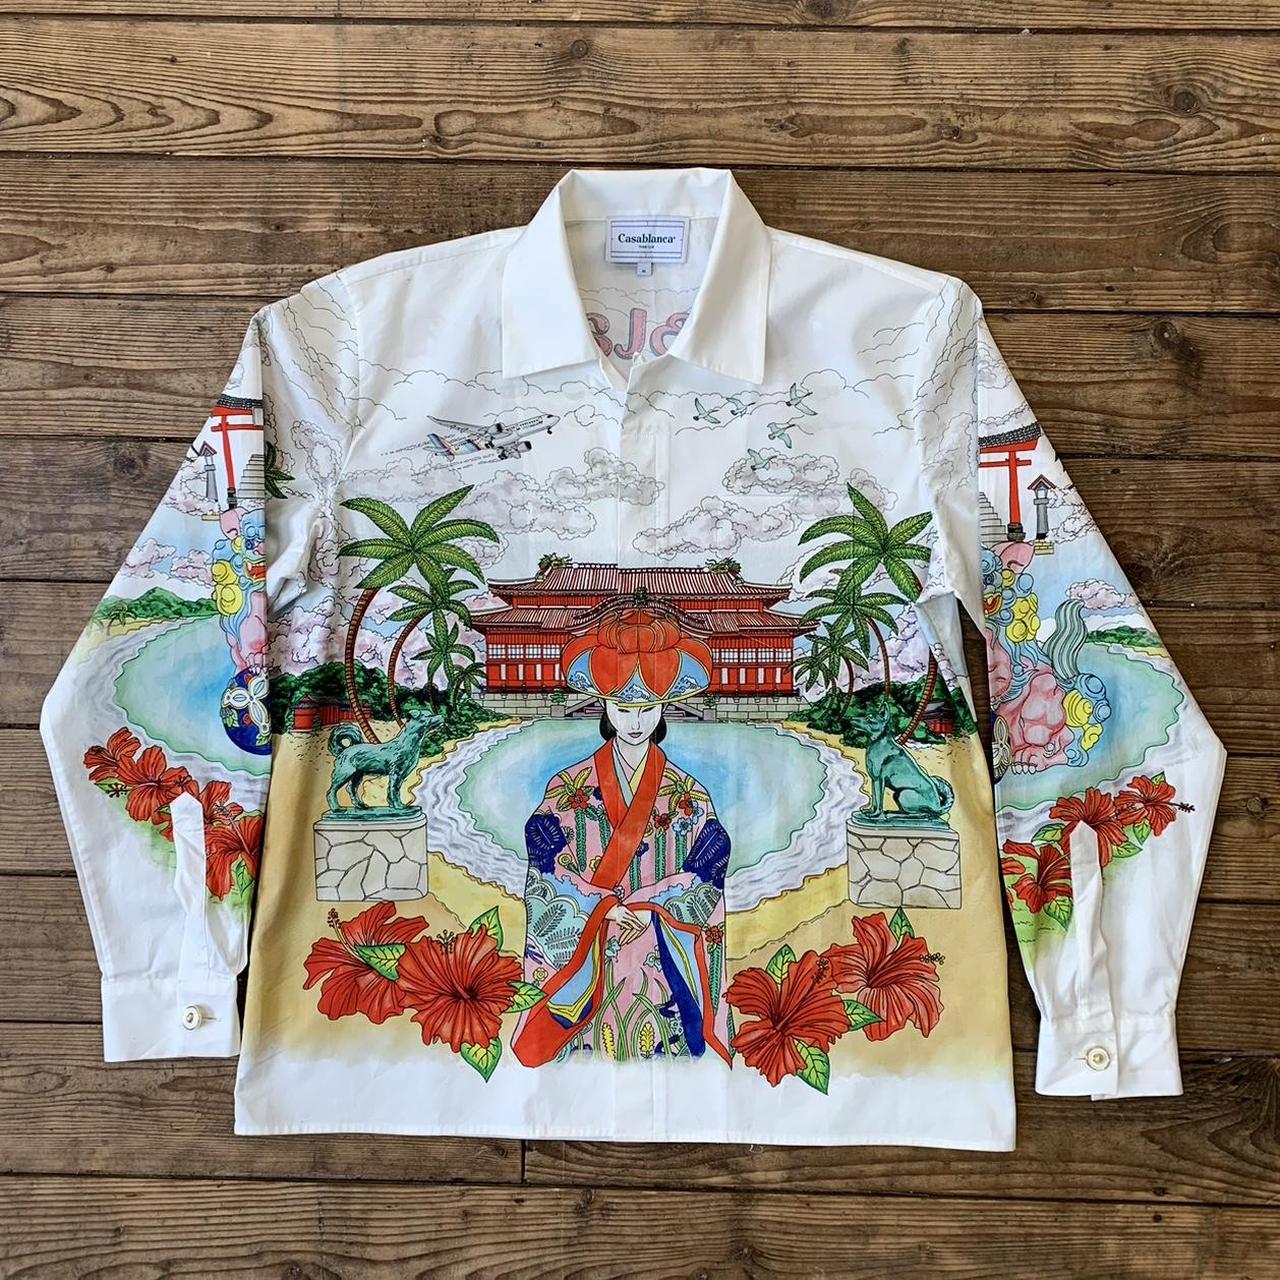 Casablanca Okinawa Cotton Shirt Stunning... - Depop